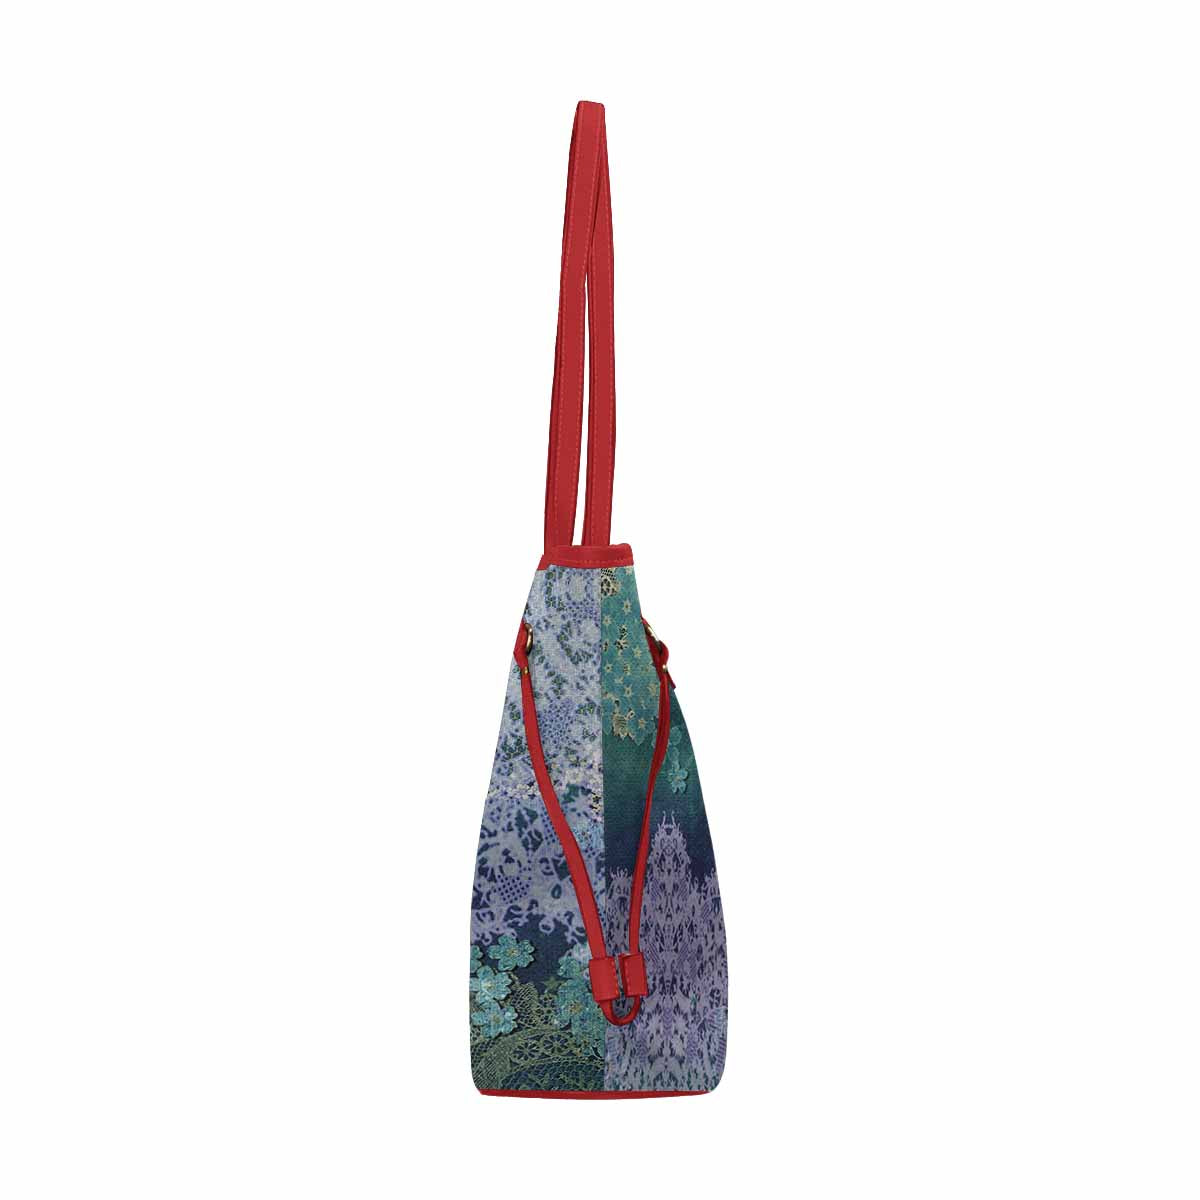 Victorian printed lace handbag, MODEL 1695361 Design 05